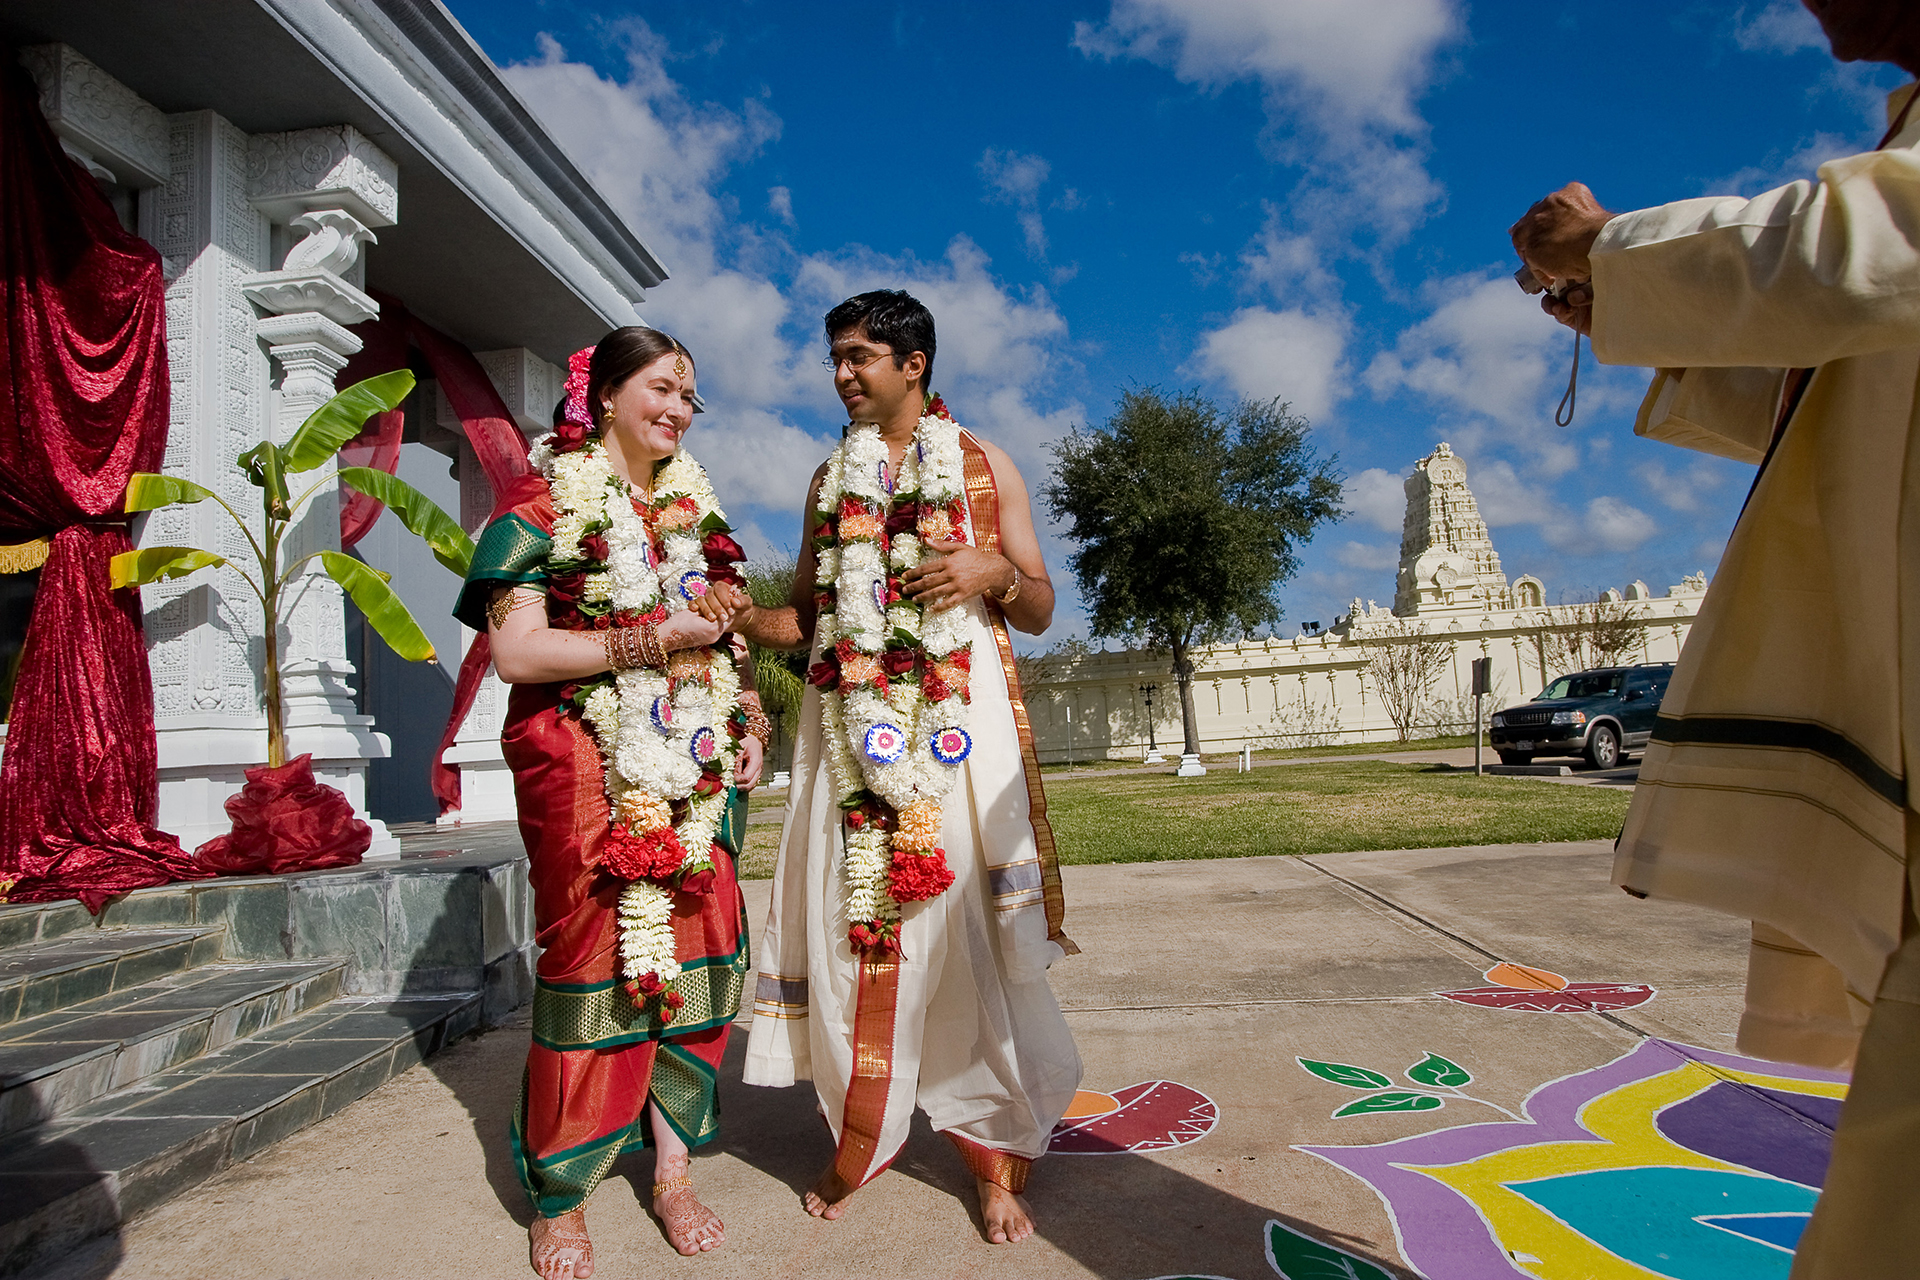 The Indian-American Wedding